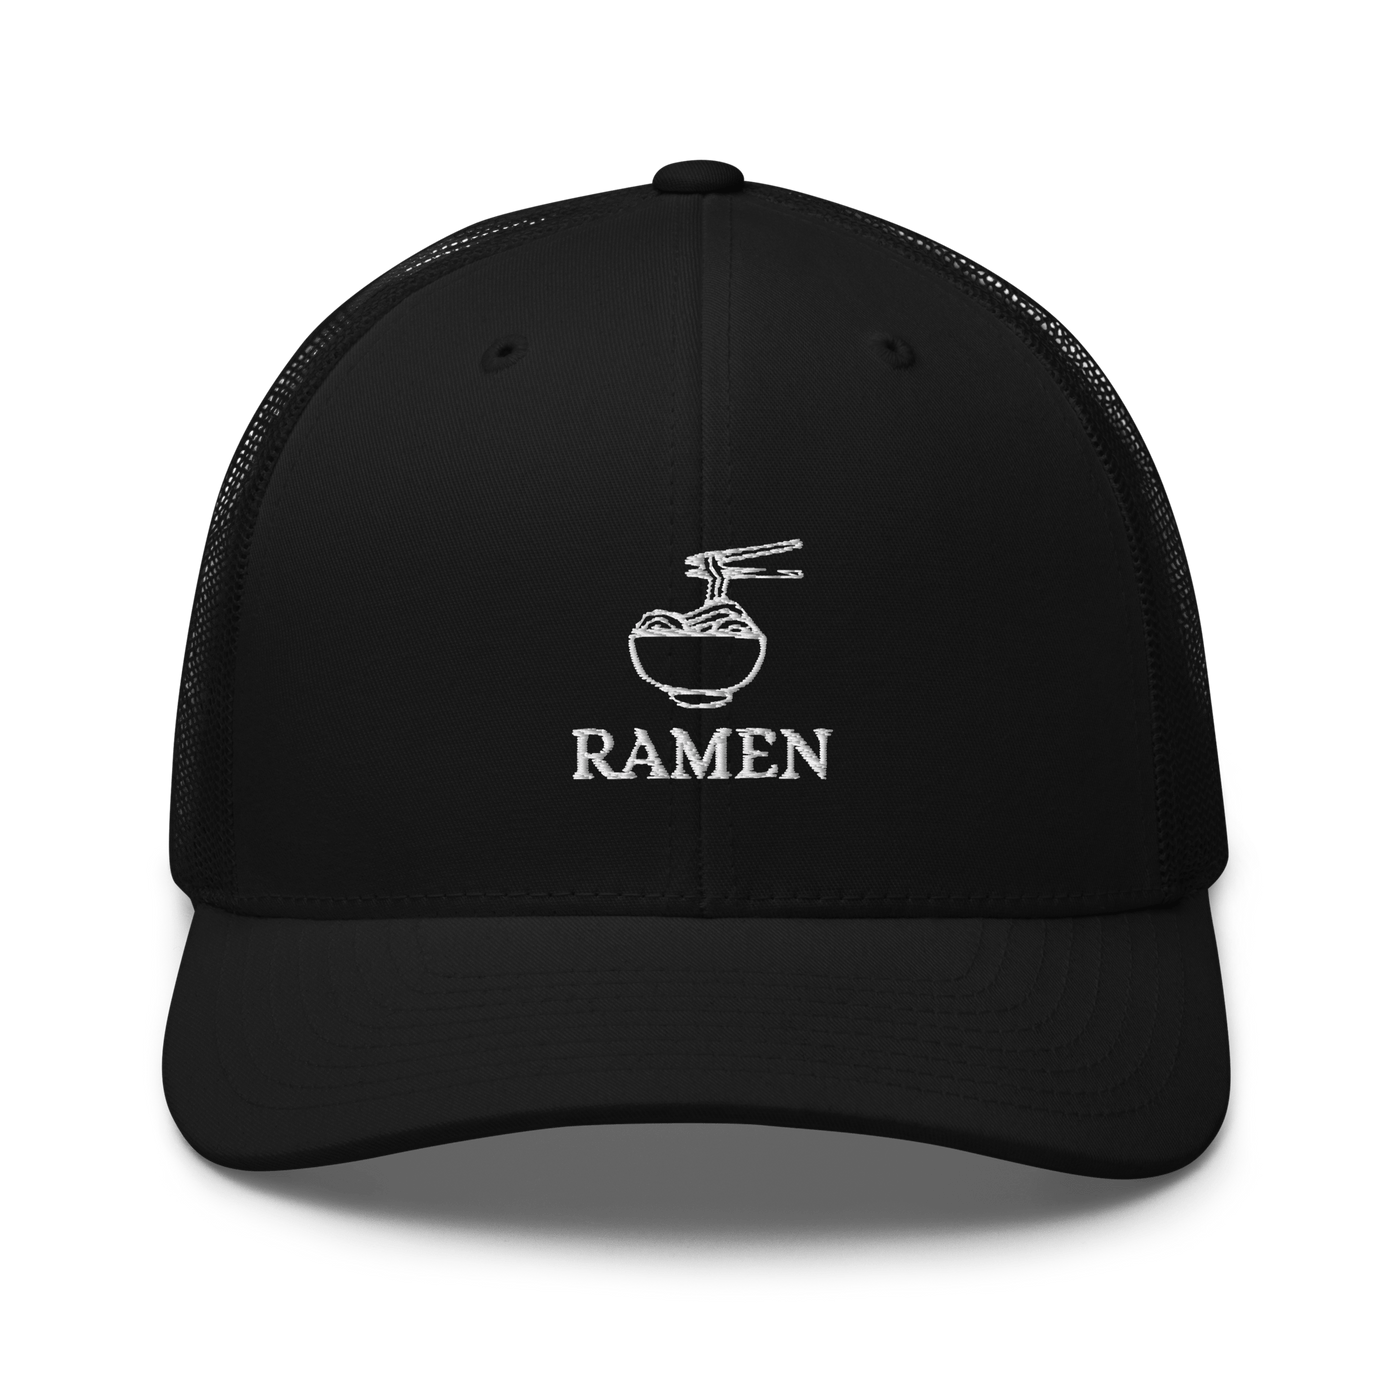 Ramen Bowl Trucker Cap - Black - - Just Another Cap Store